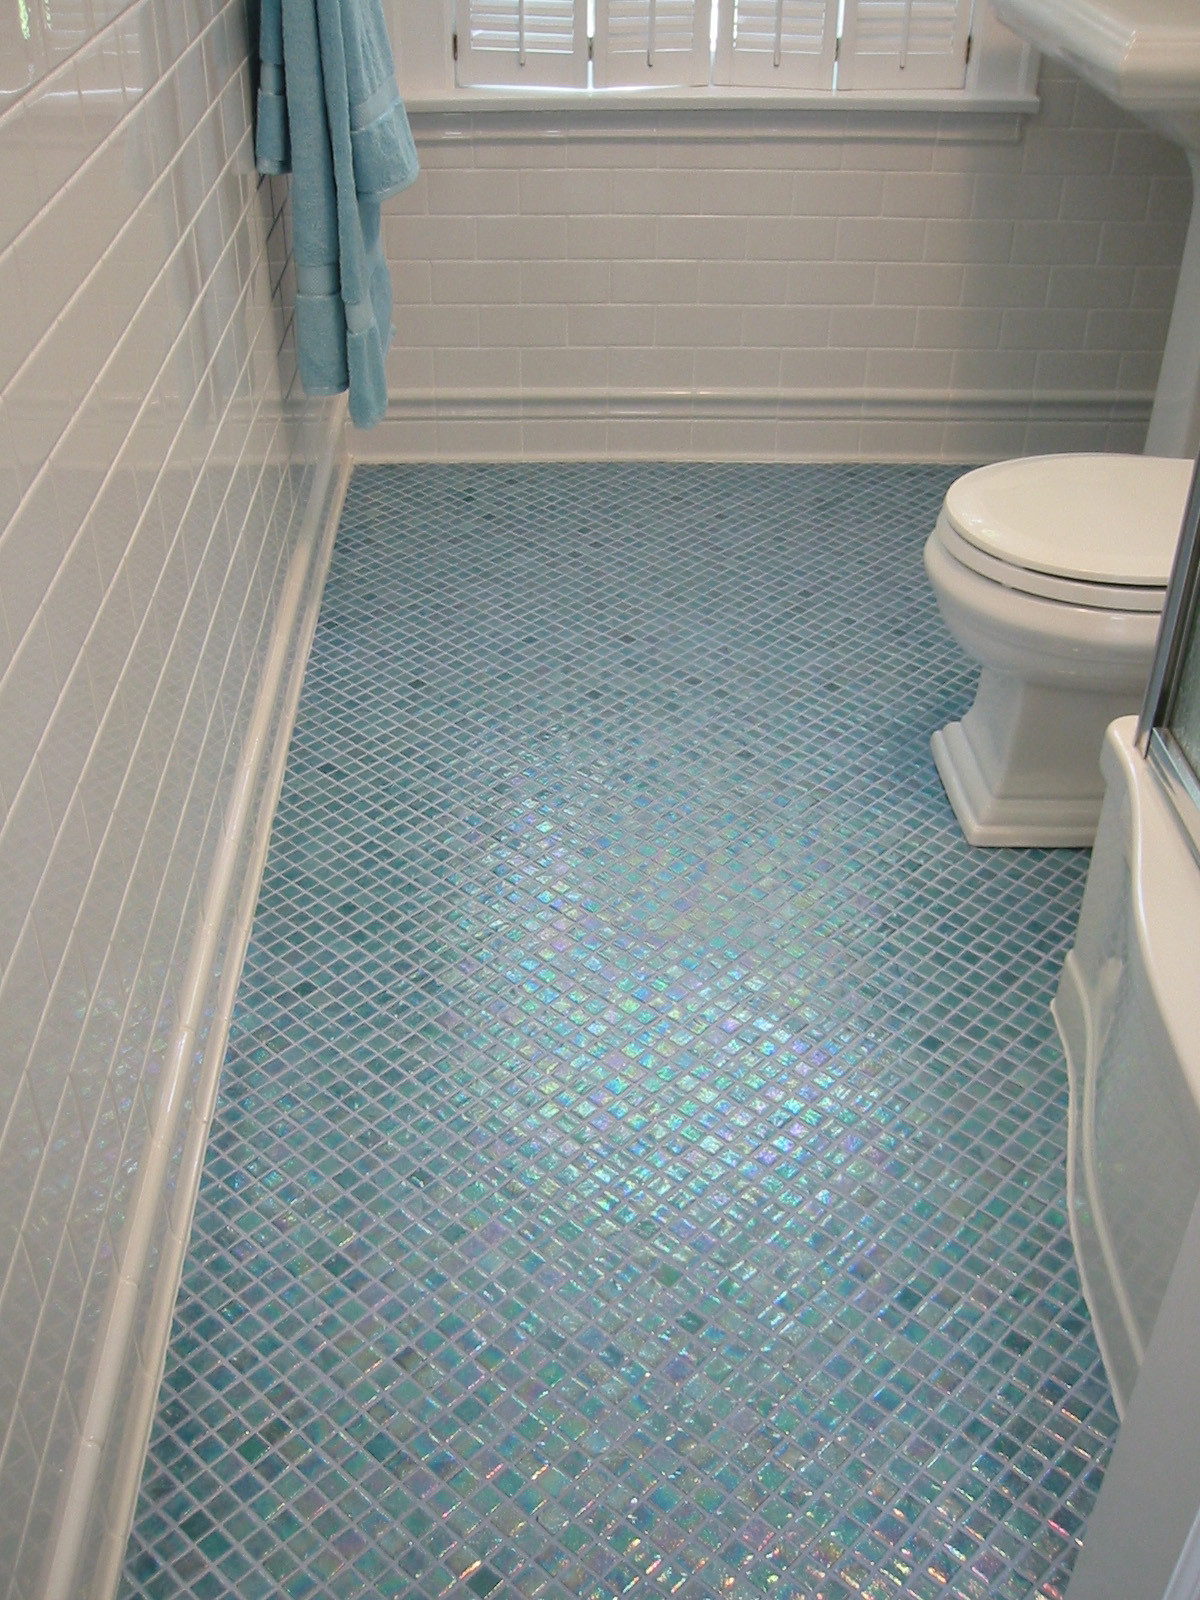 Bathroom Ceramic Floor Tile Ideas
 21 ceramic tile ideas for small bathrooms 2019